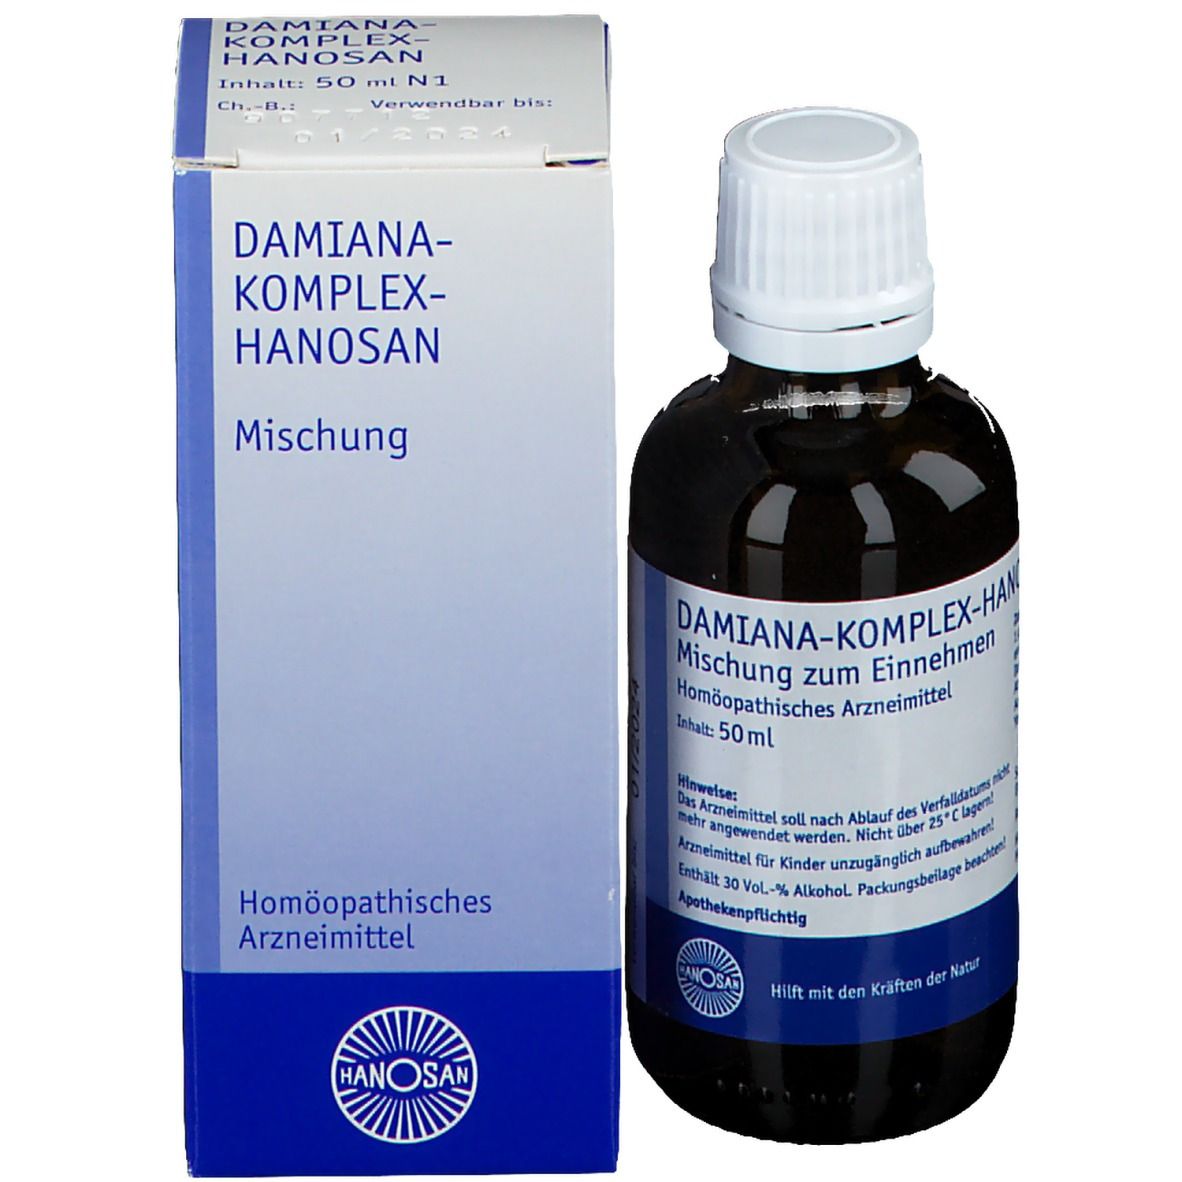 Damiana-Komplex-Hanosan